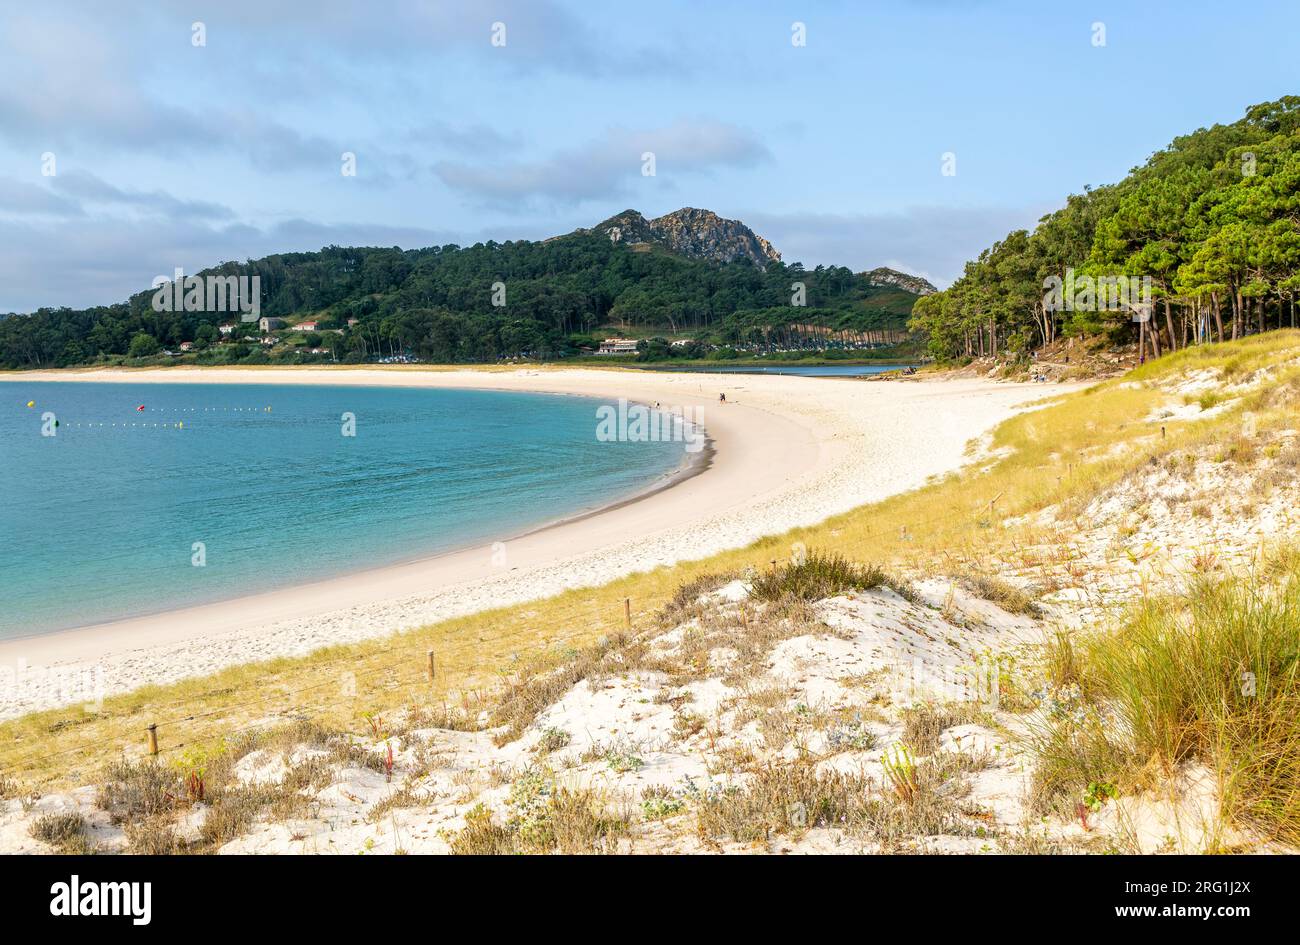 Playa de Rodas, spiaggia sabbiosa, Isole Cies, Isole atlantiche Galicia Maritime Terrestrial National Park, Spagna Foto Stock